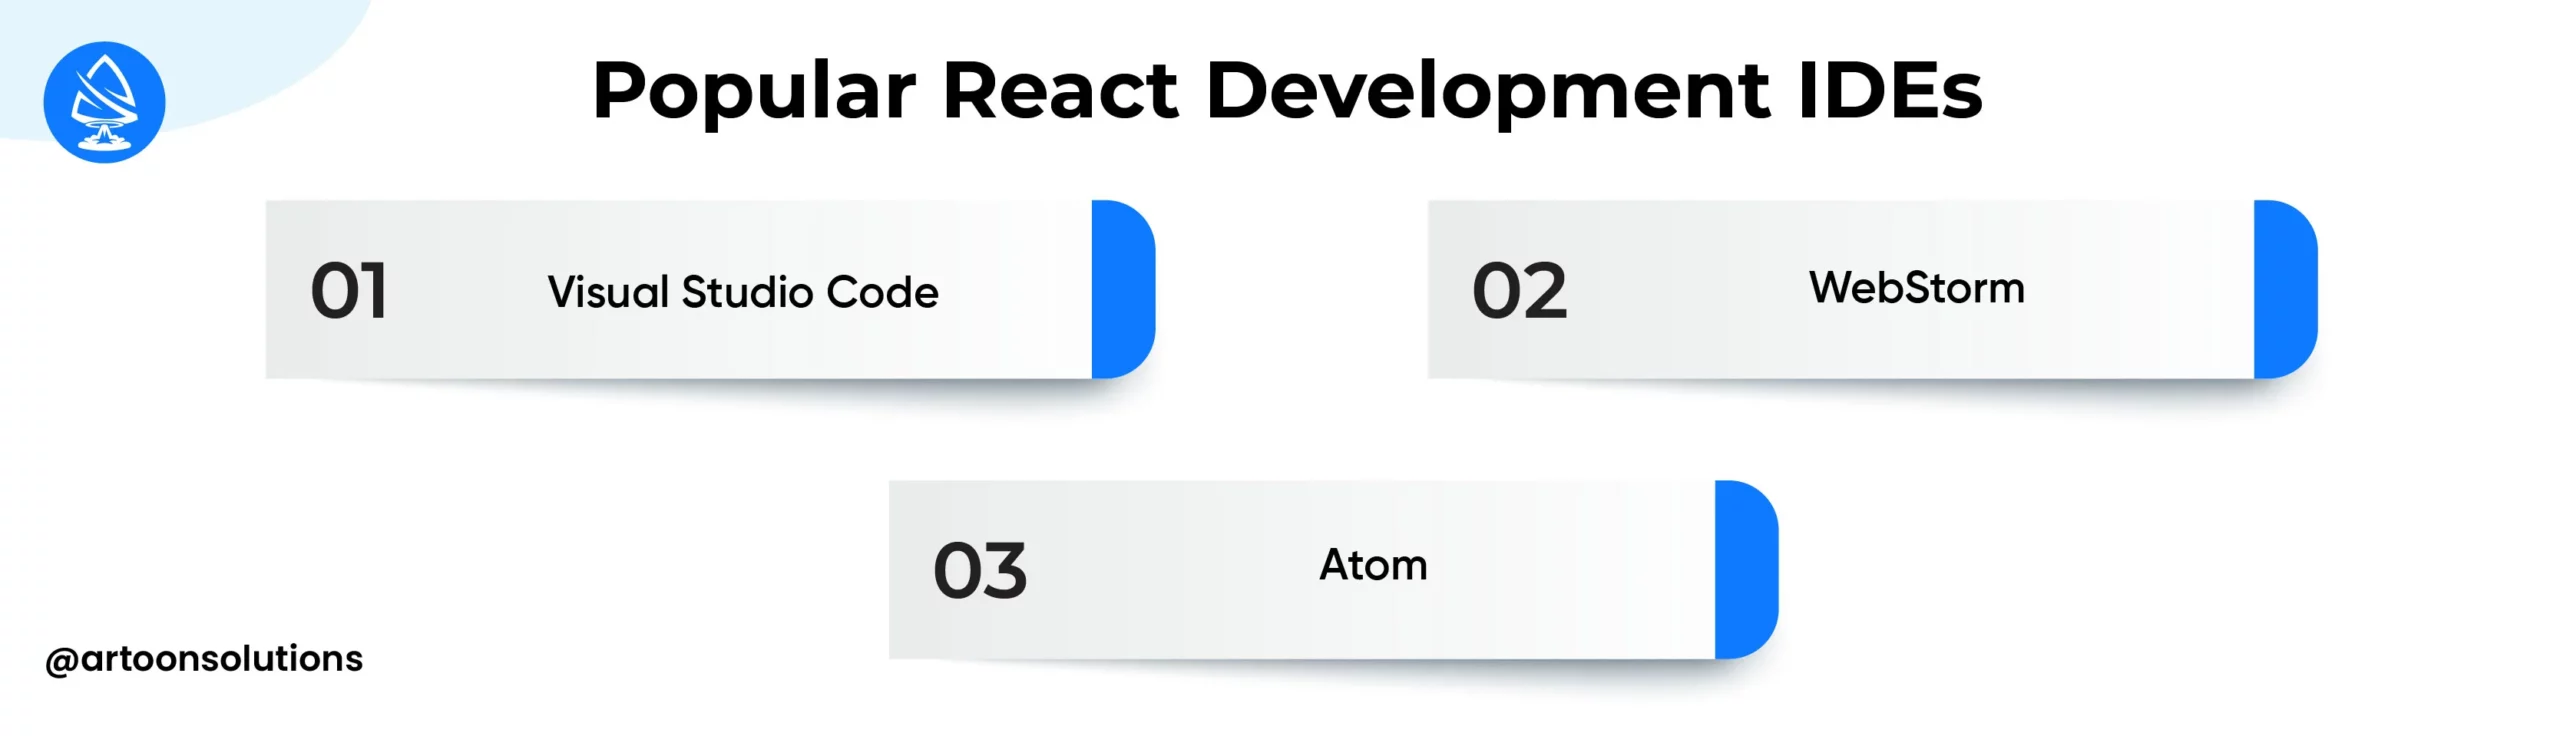 Overview of Popular React Development IDEs